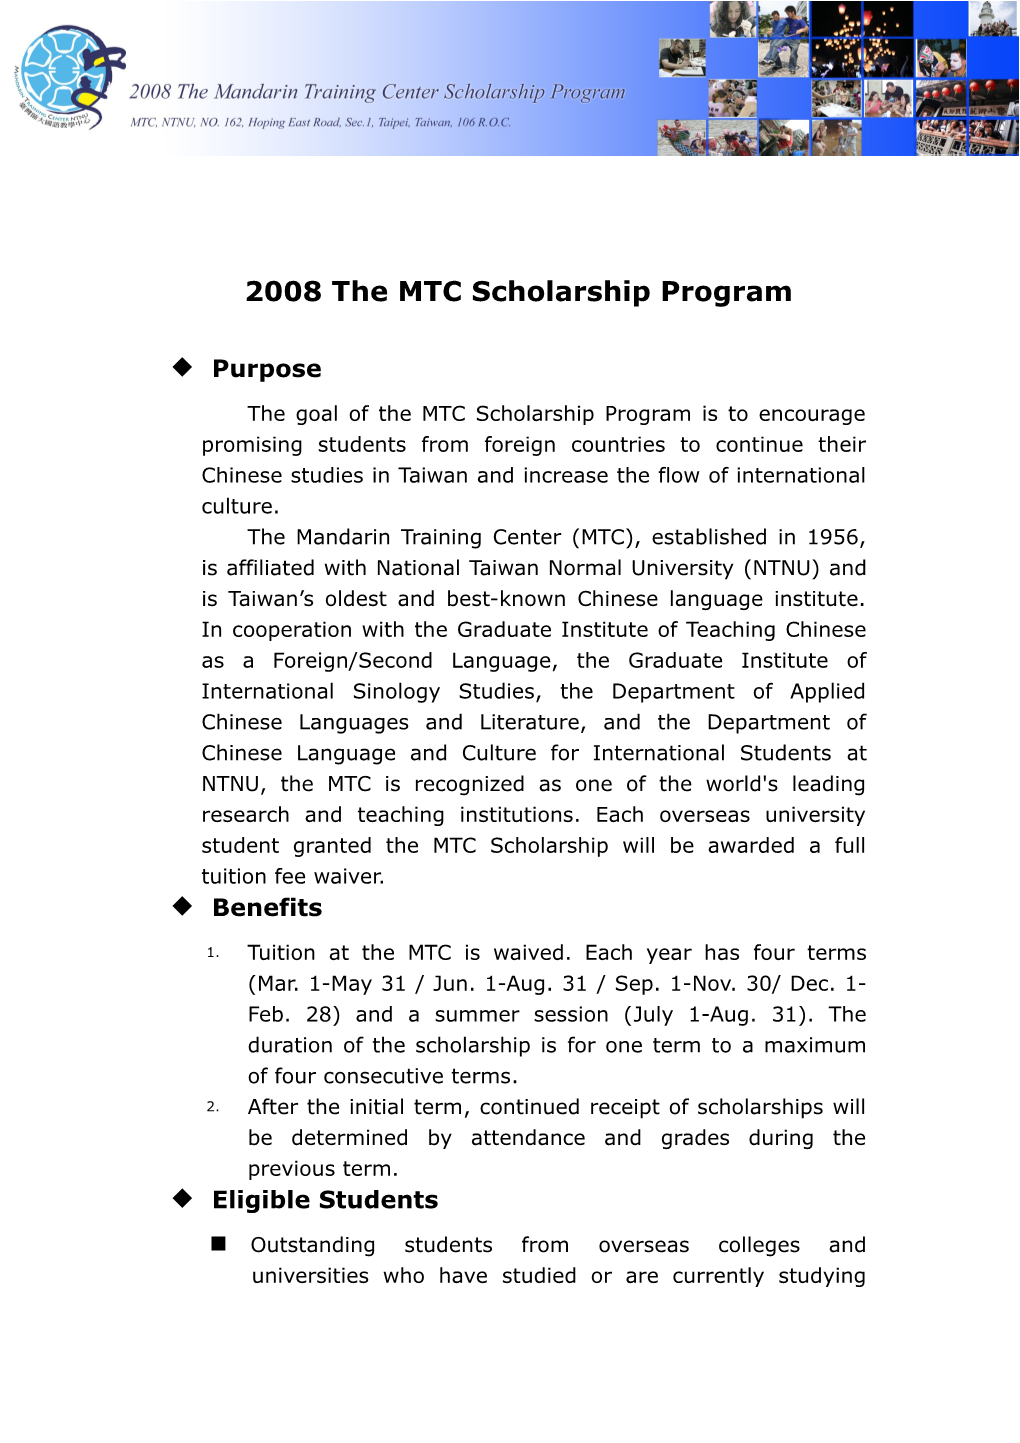 The MTC Scholarship Program